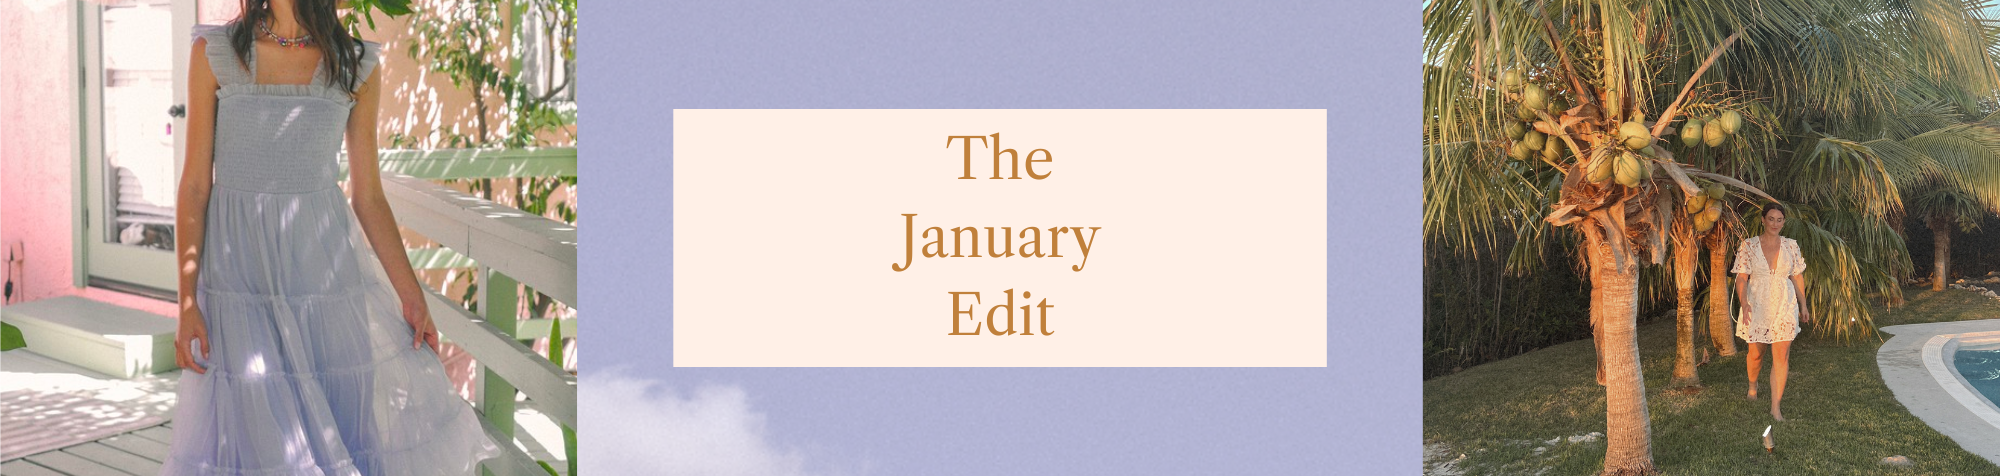 The January Edit